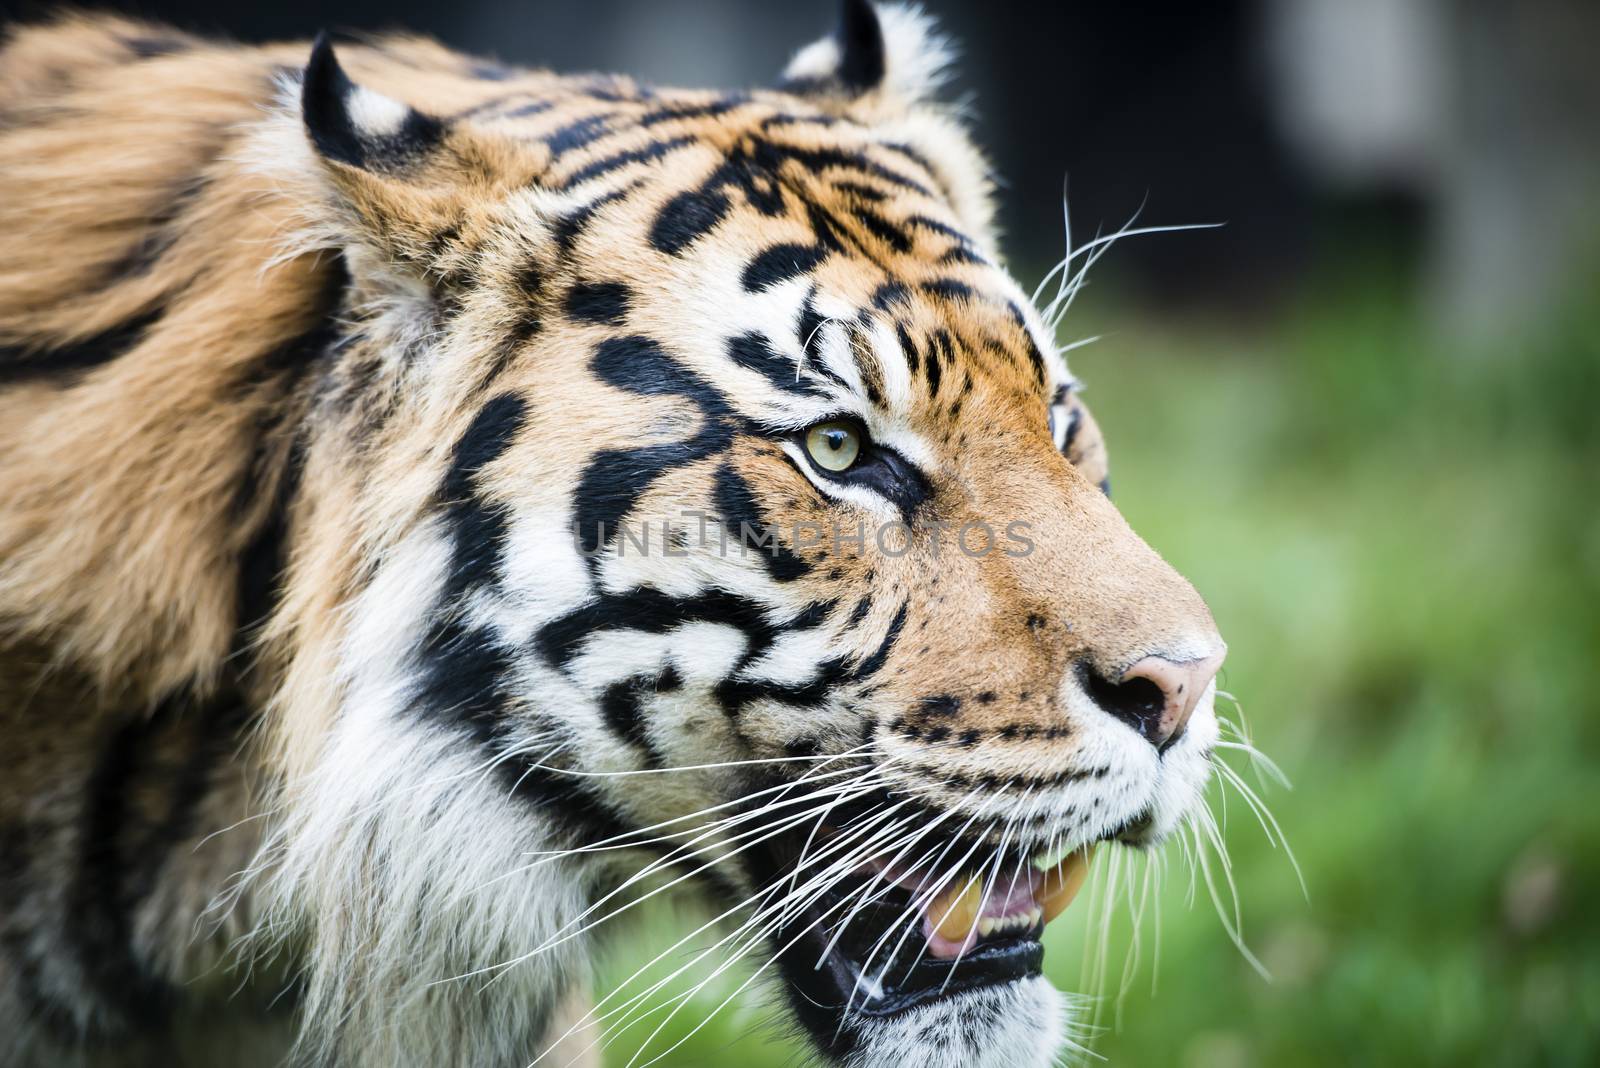 The Sumatran tiger (Panthera tigris sumatrae) is a rare tiger subspecies that inhabits the Indonesian island of Sumatra.